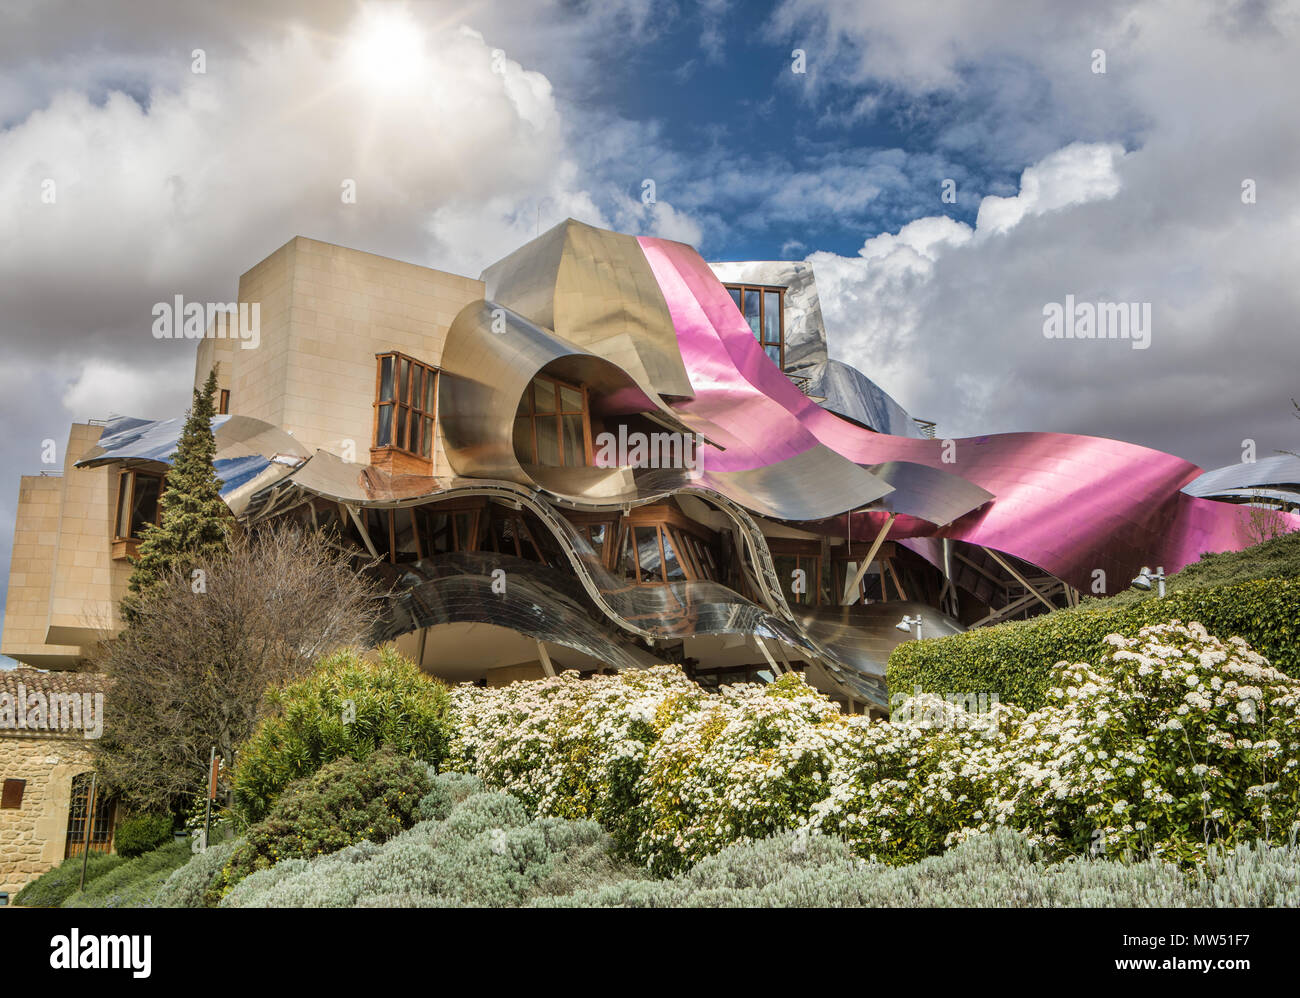 El Ciego City, Frank Gehry architect, La Rioja Area, Logroño province, Marques de Riscal Hotel, spain, wine cellar Stock Photo